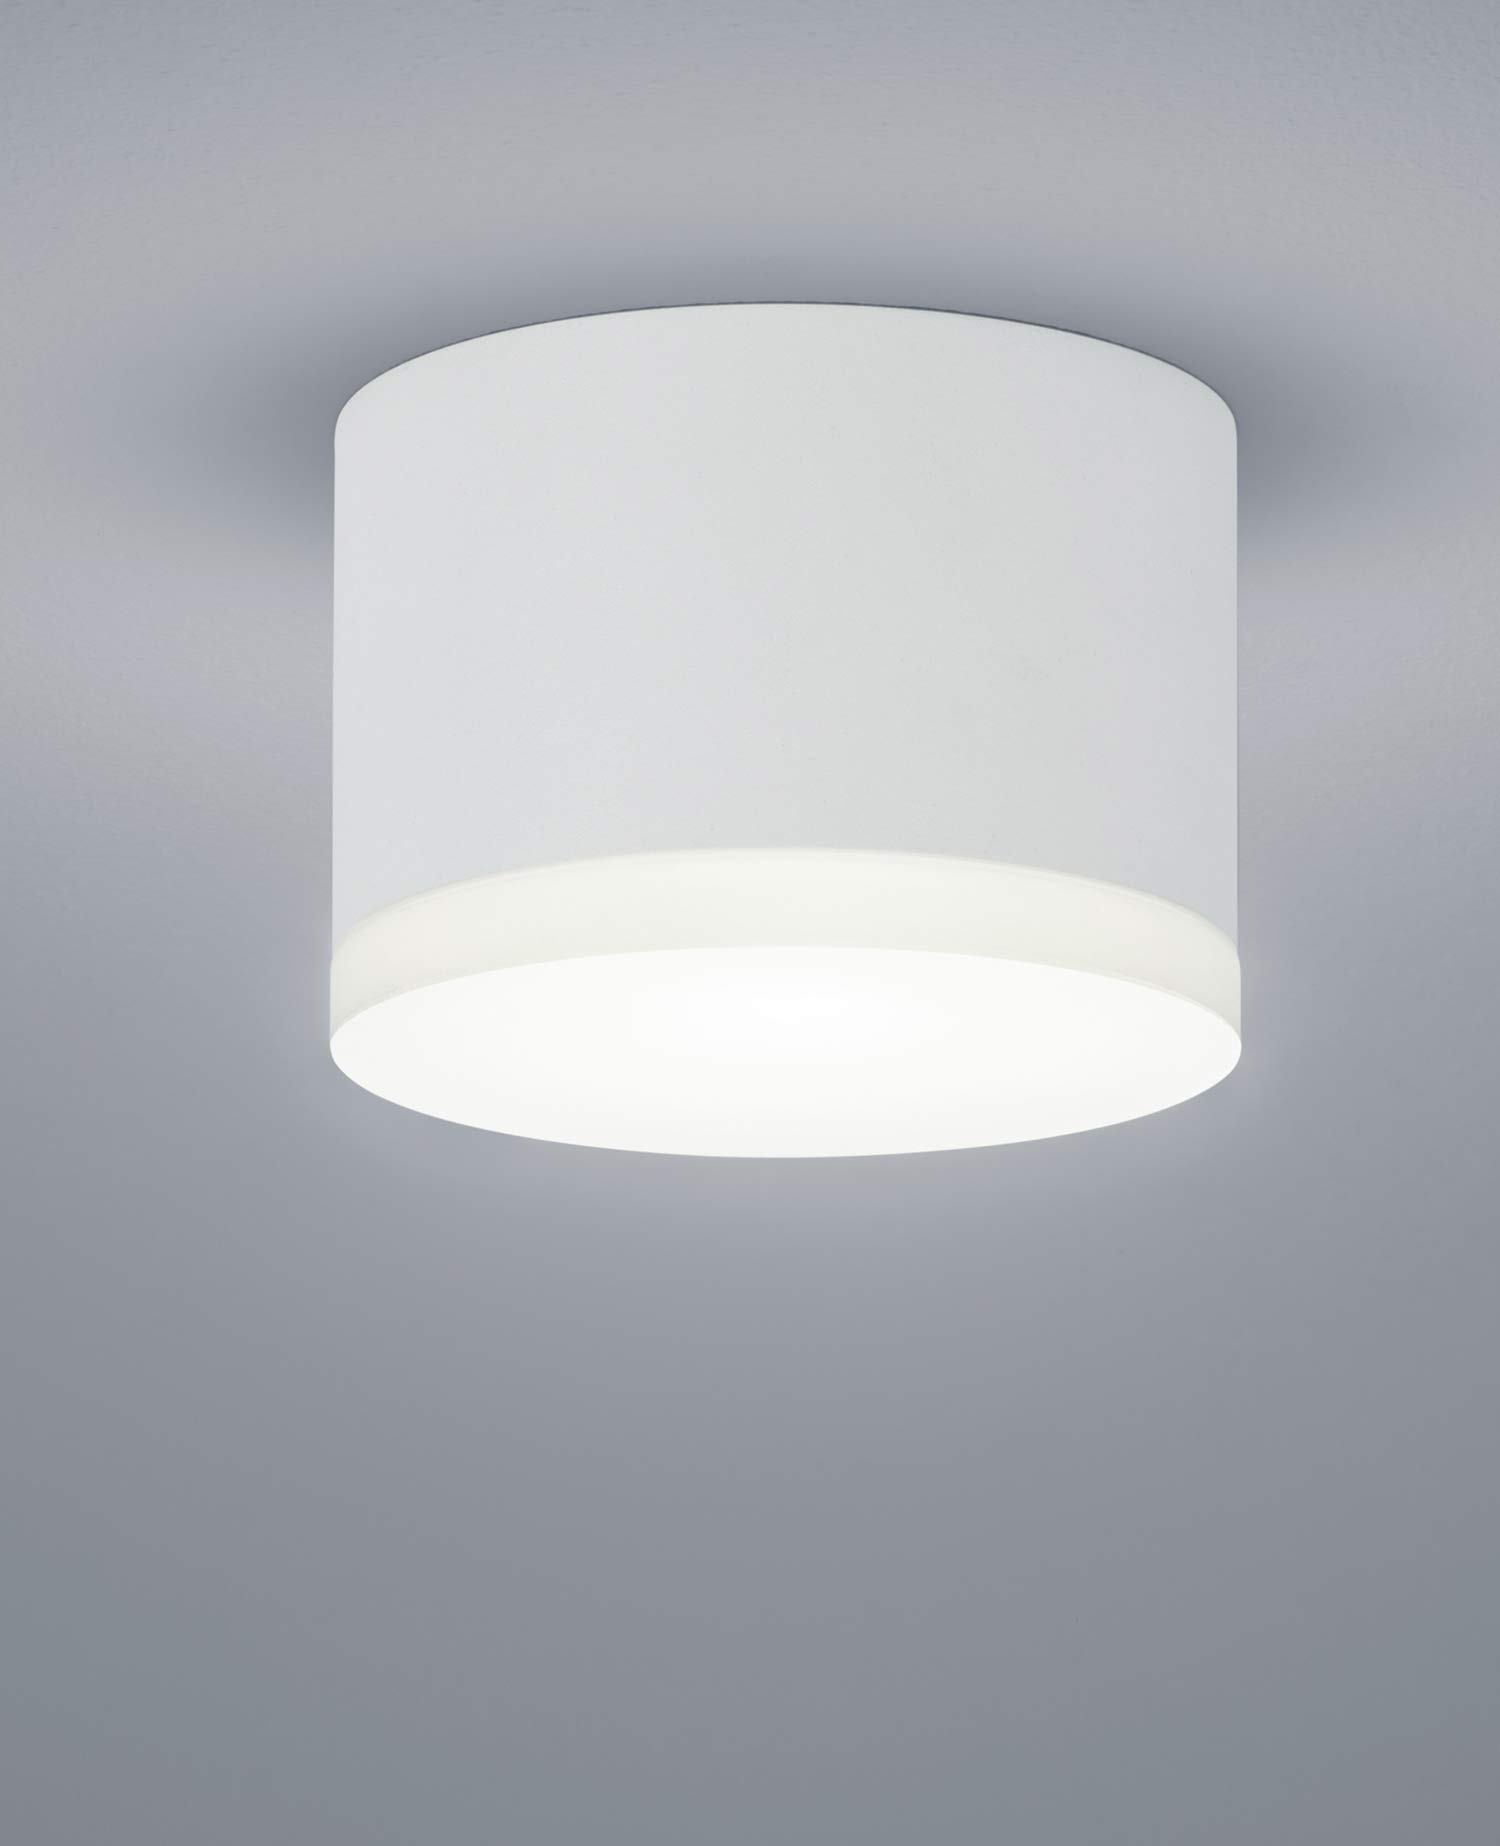 Energy efficient ceiling lights